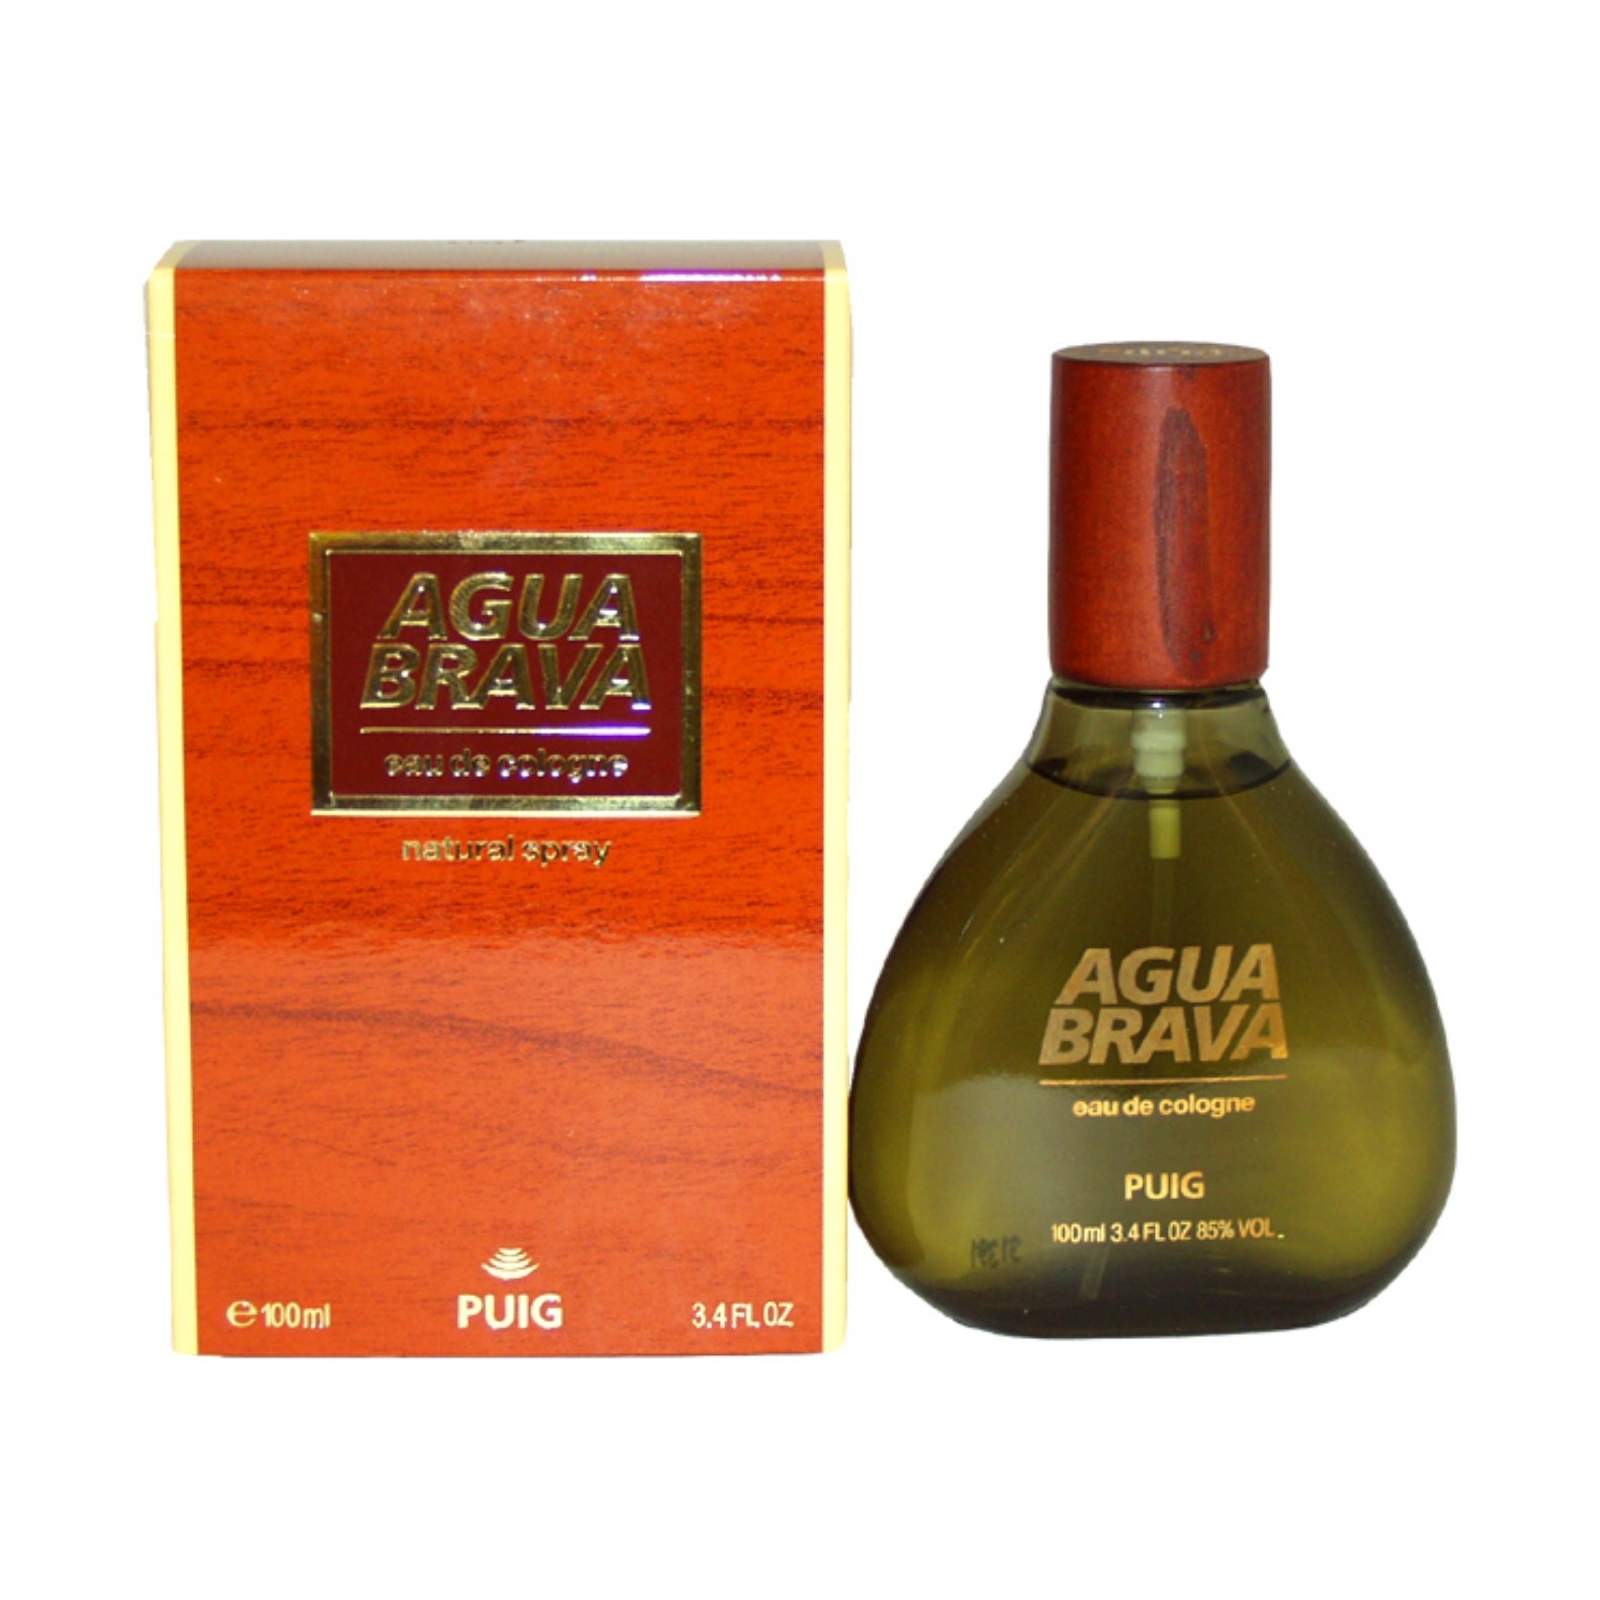 Antonio Puig Agua Brava by  for Men - 3.4 oz EDC Spray